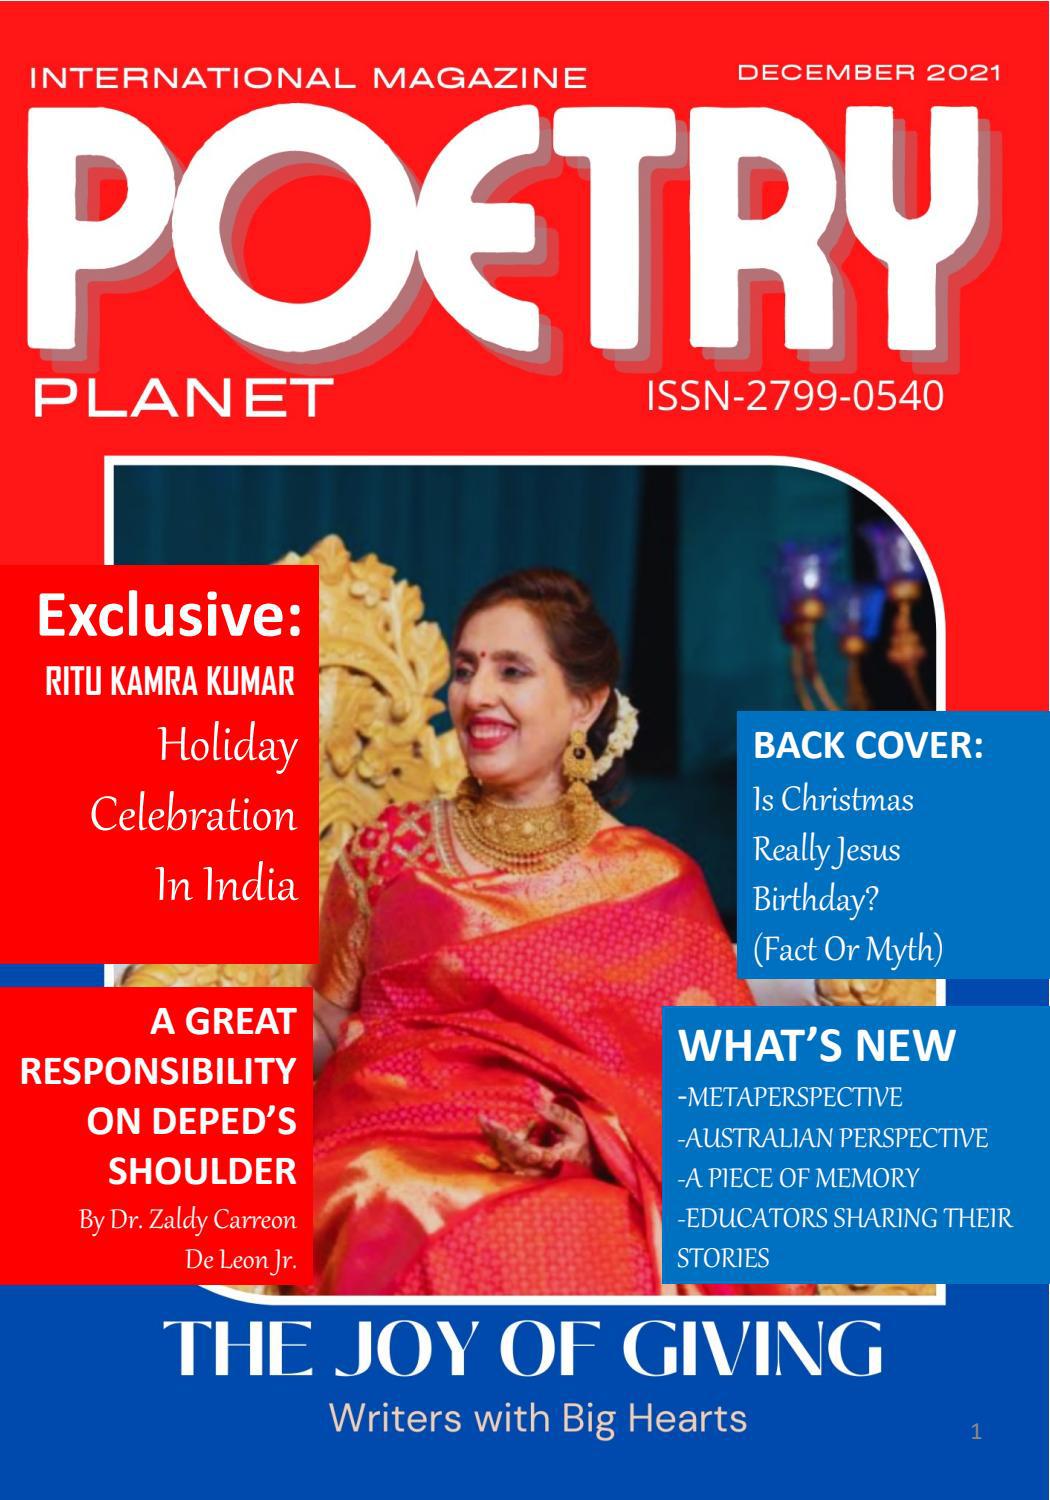 POETRY PLANET International magazine (December 2021 Edition)